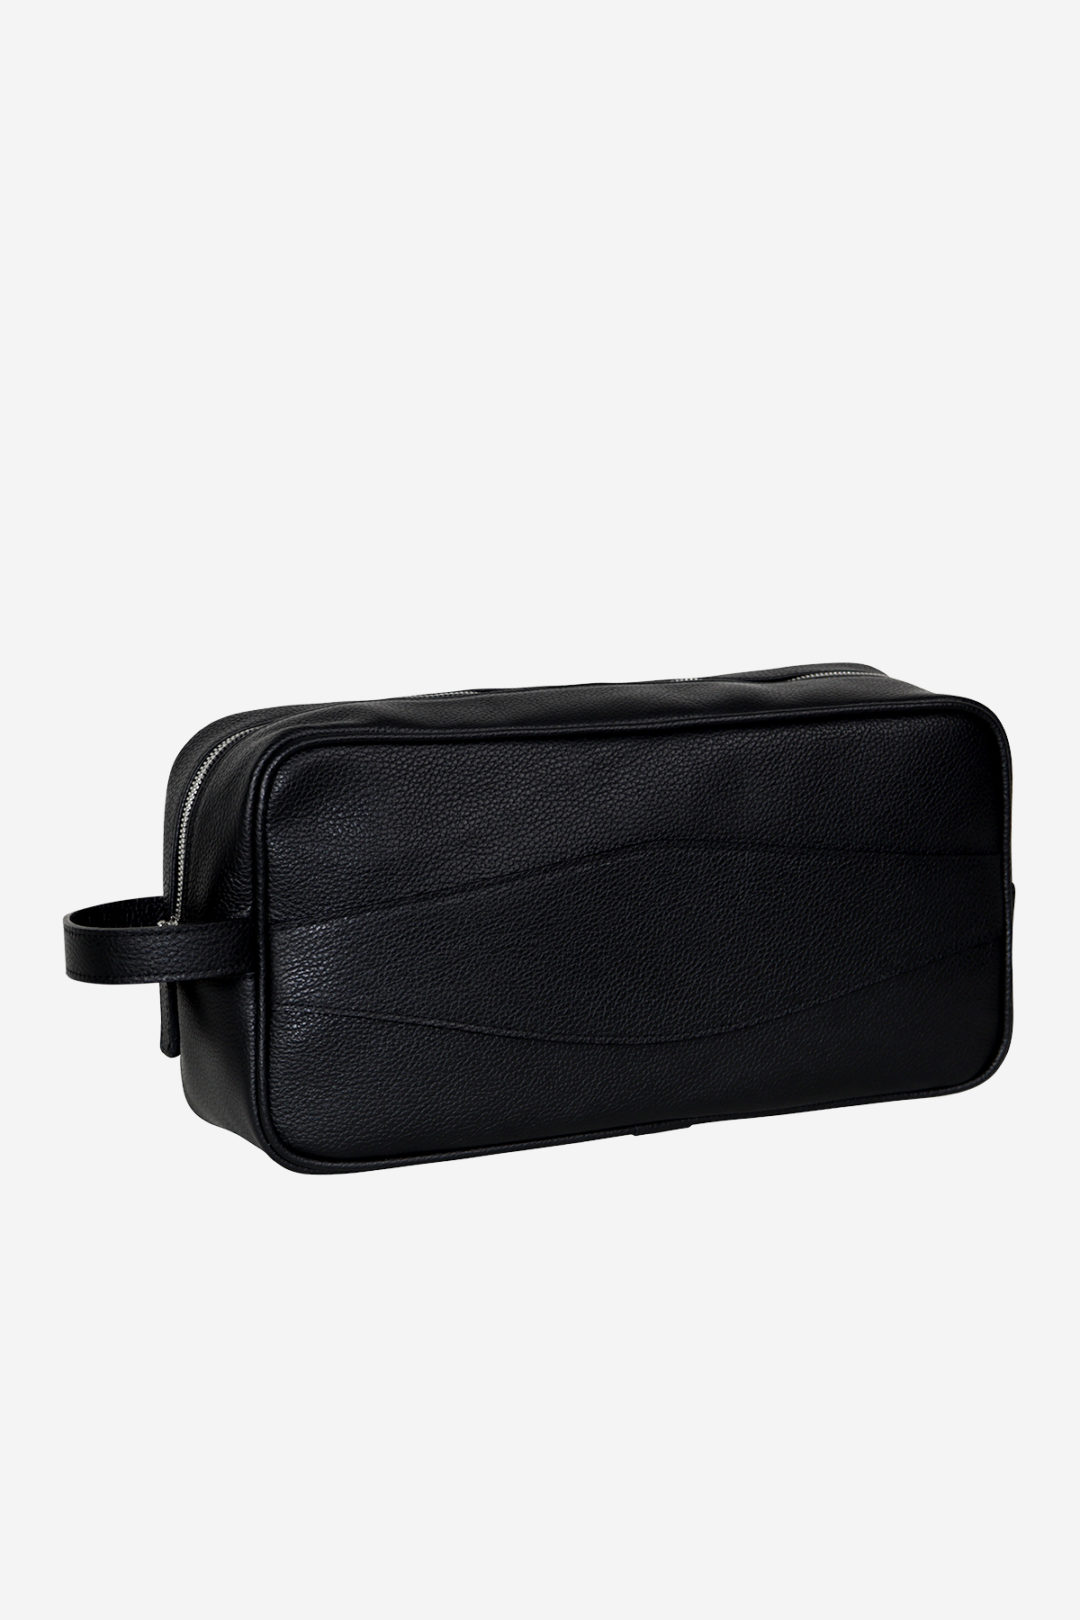 Original Shoe Bag total black sport leather shoe holder waterproof and resistant genuine calf leather